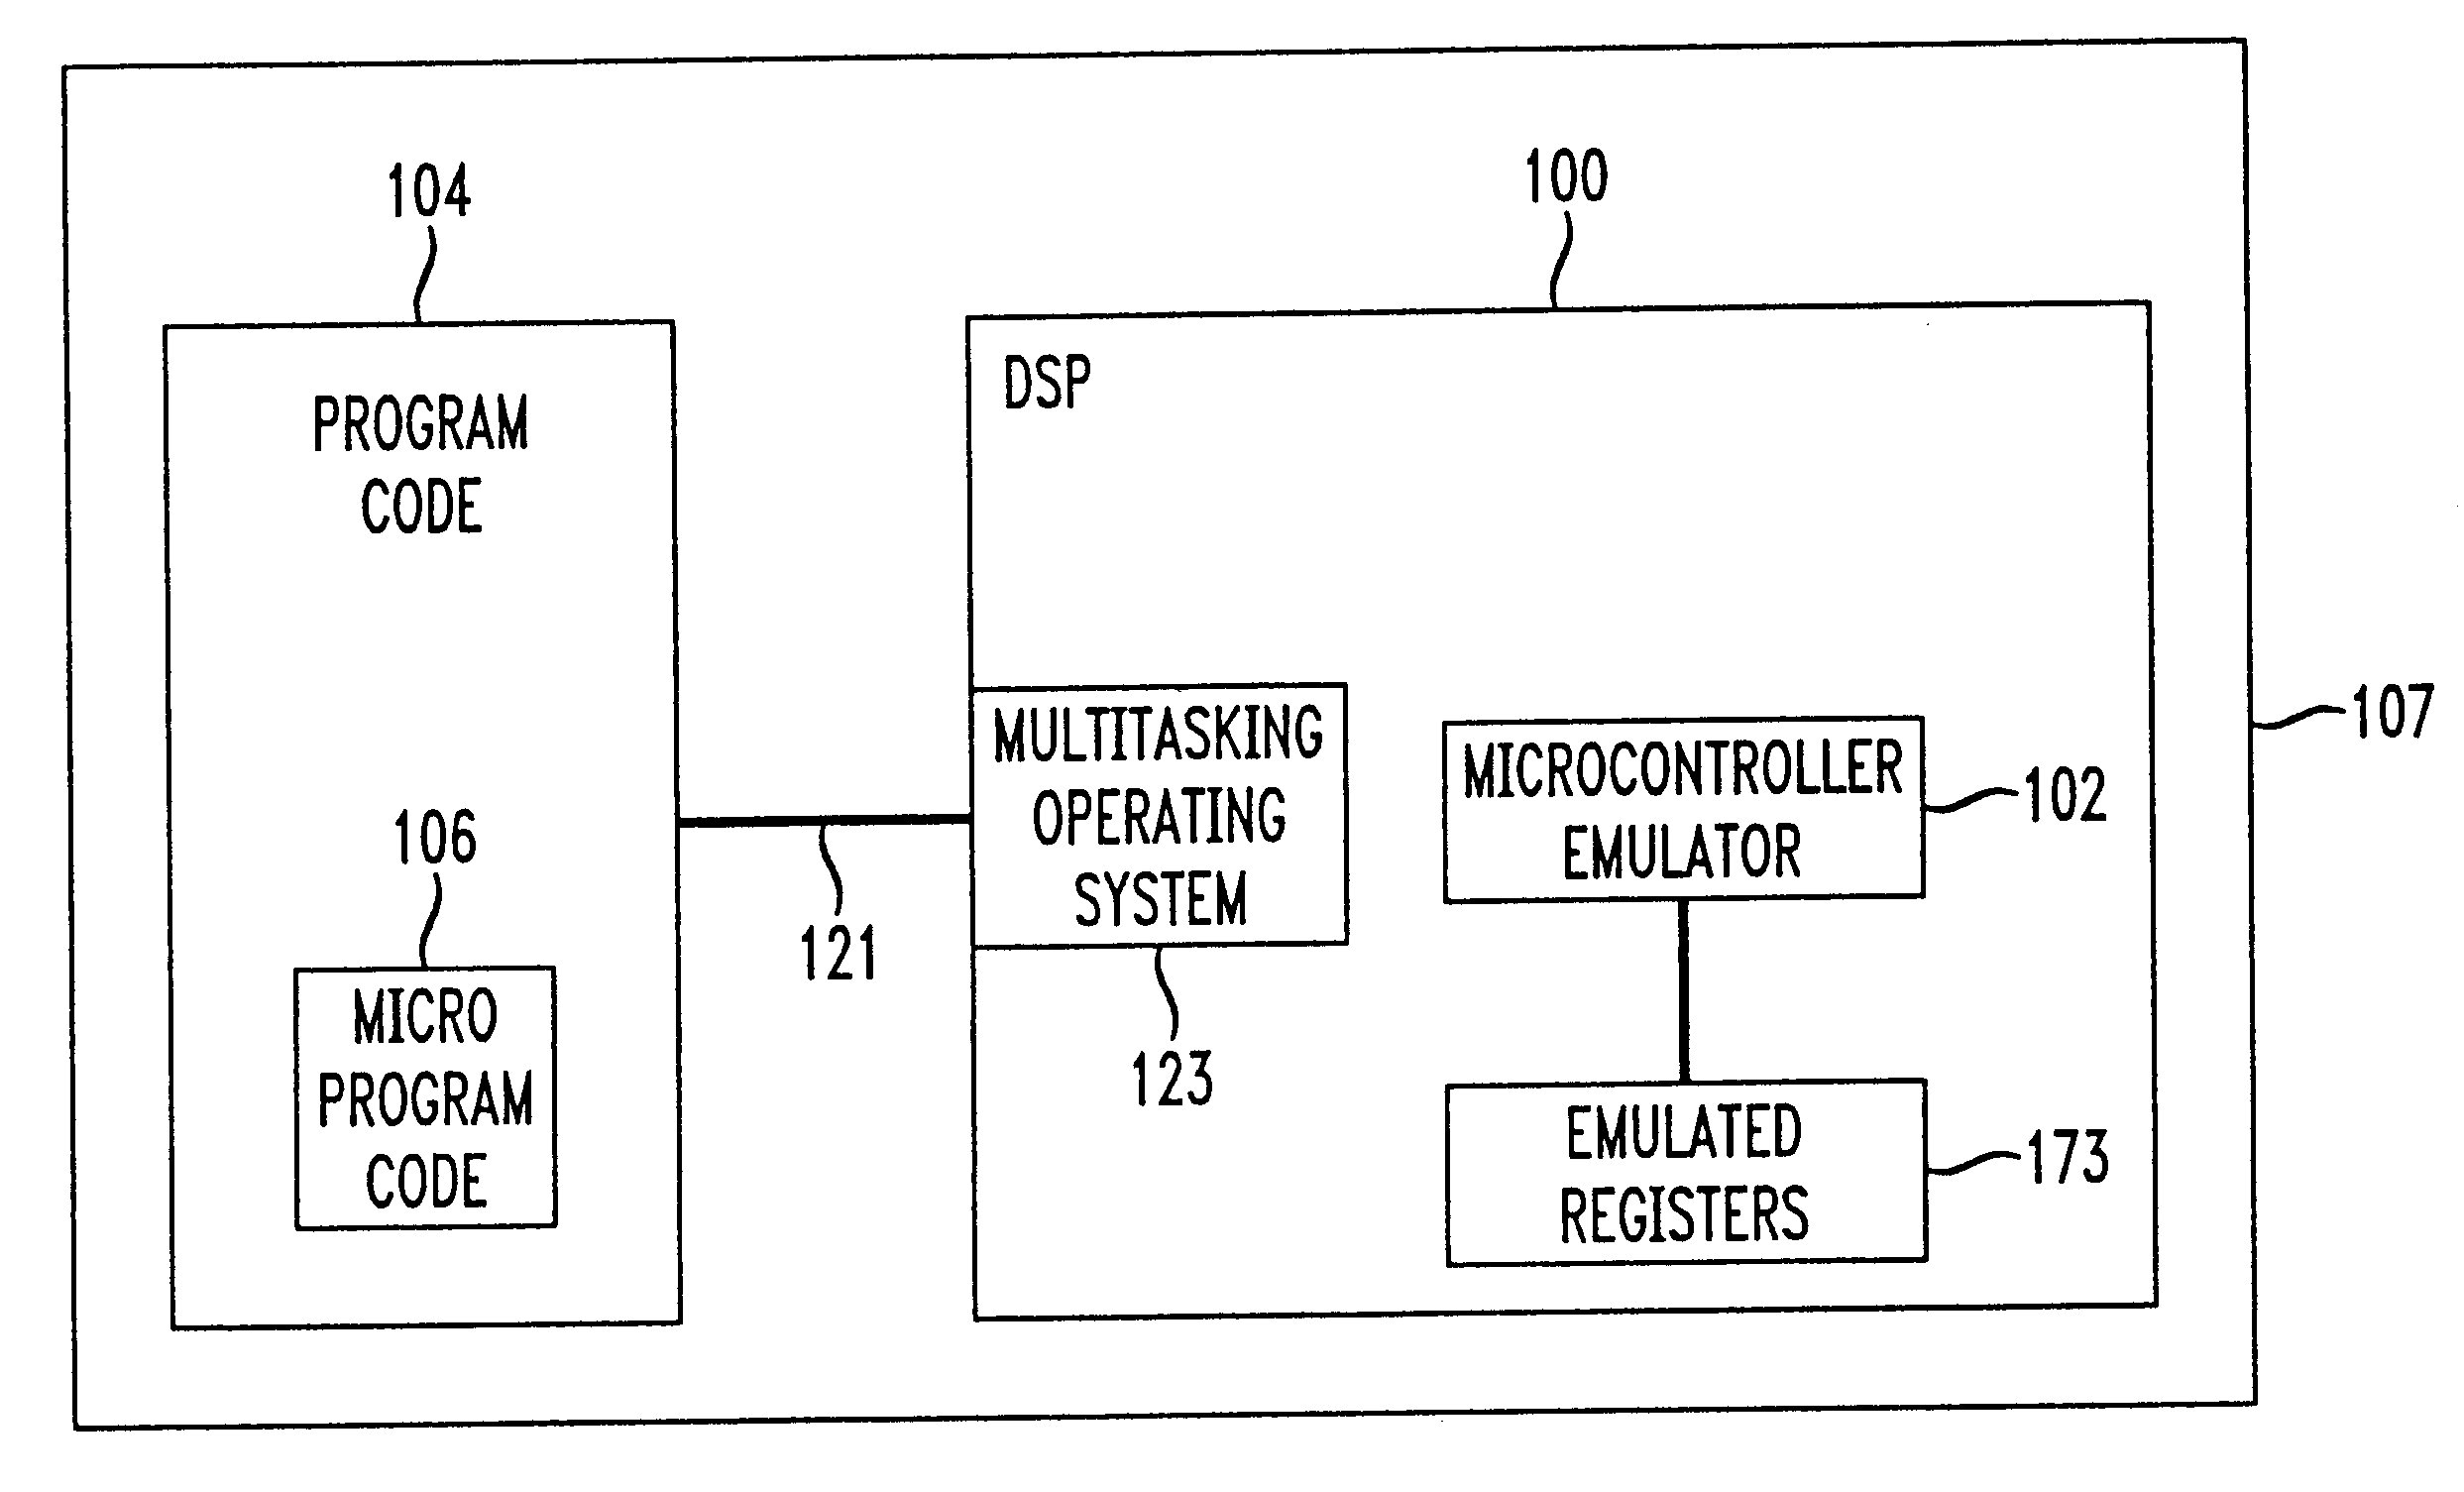 DSP emulating a microcontroller